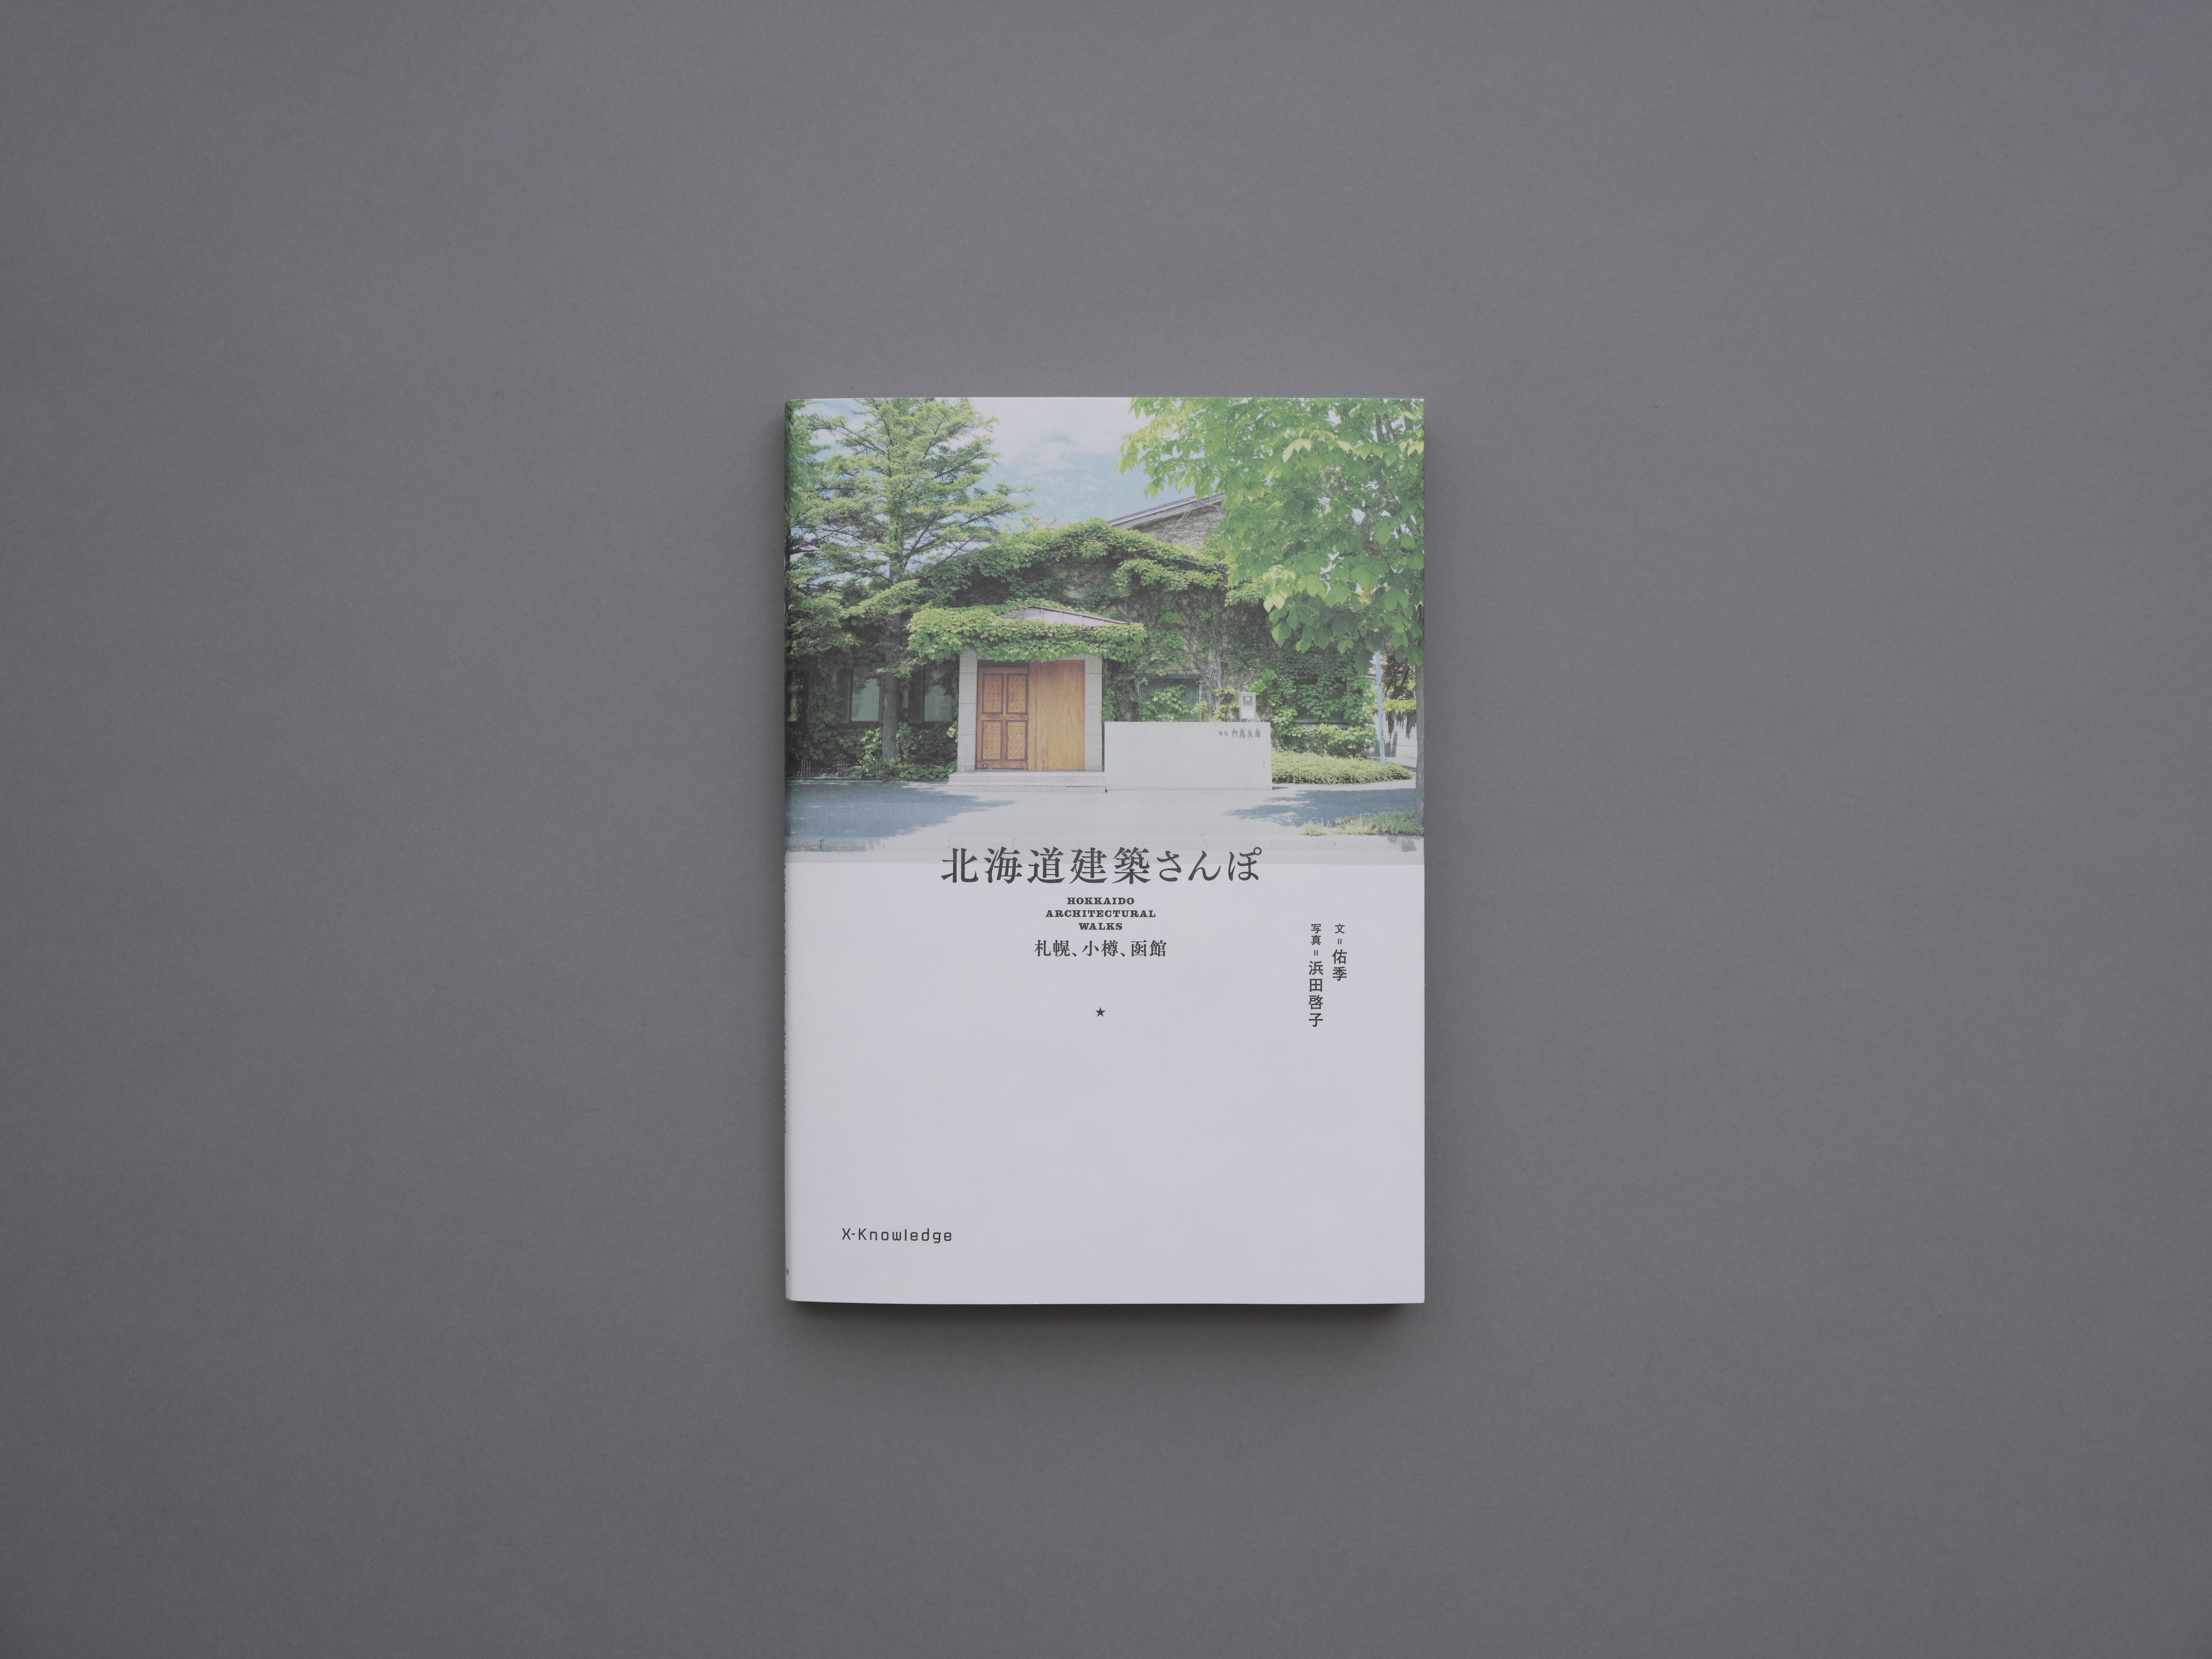 x-knowledge/北海道建築さんぽ